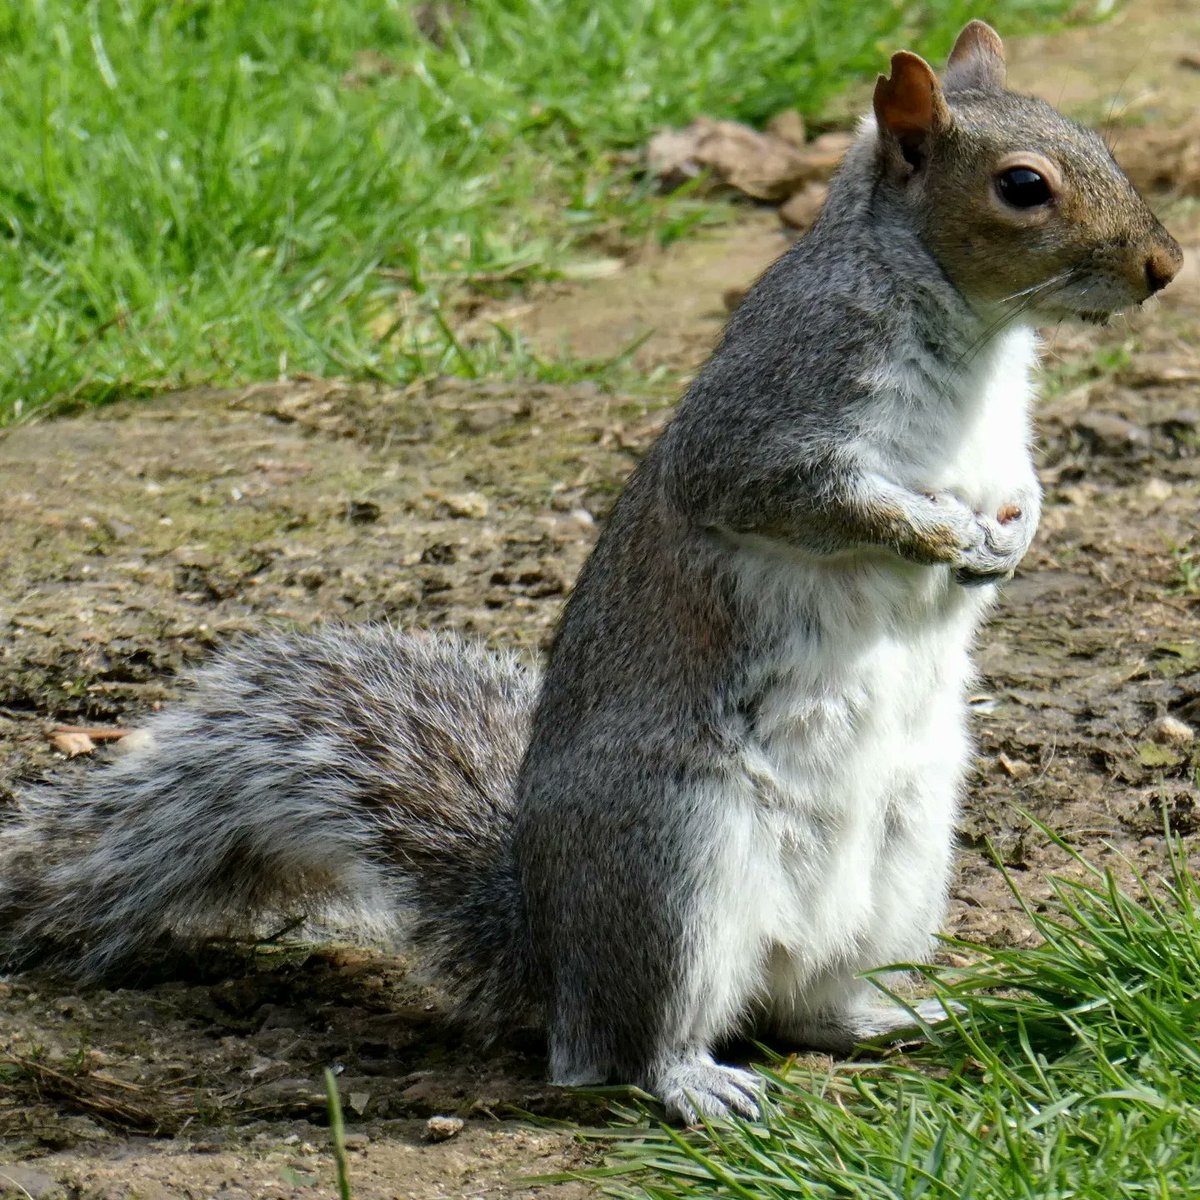 Loved watching this squirrels antics today #ukwildlife #squirrels